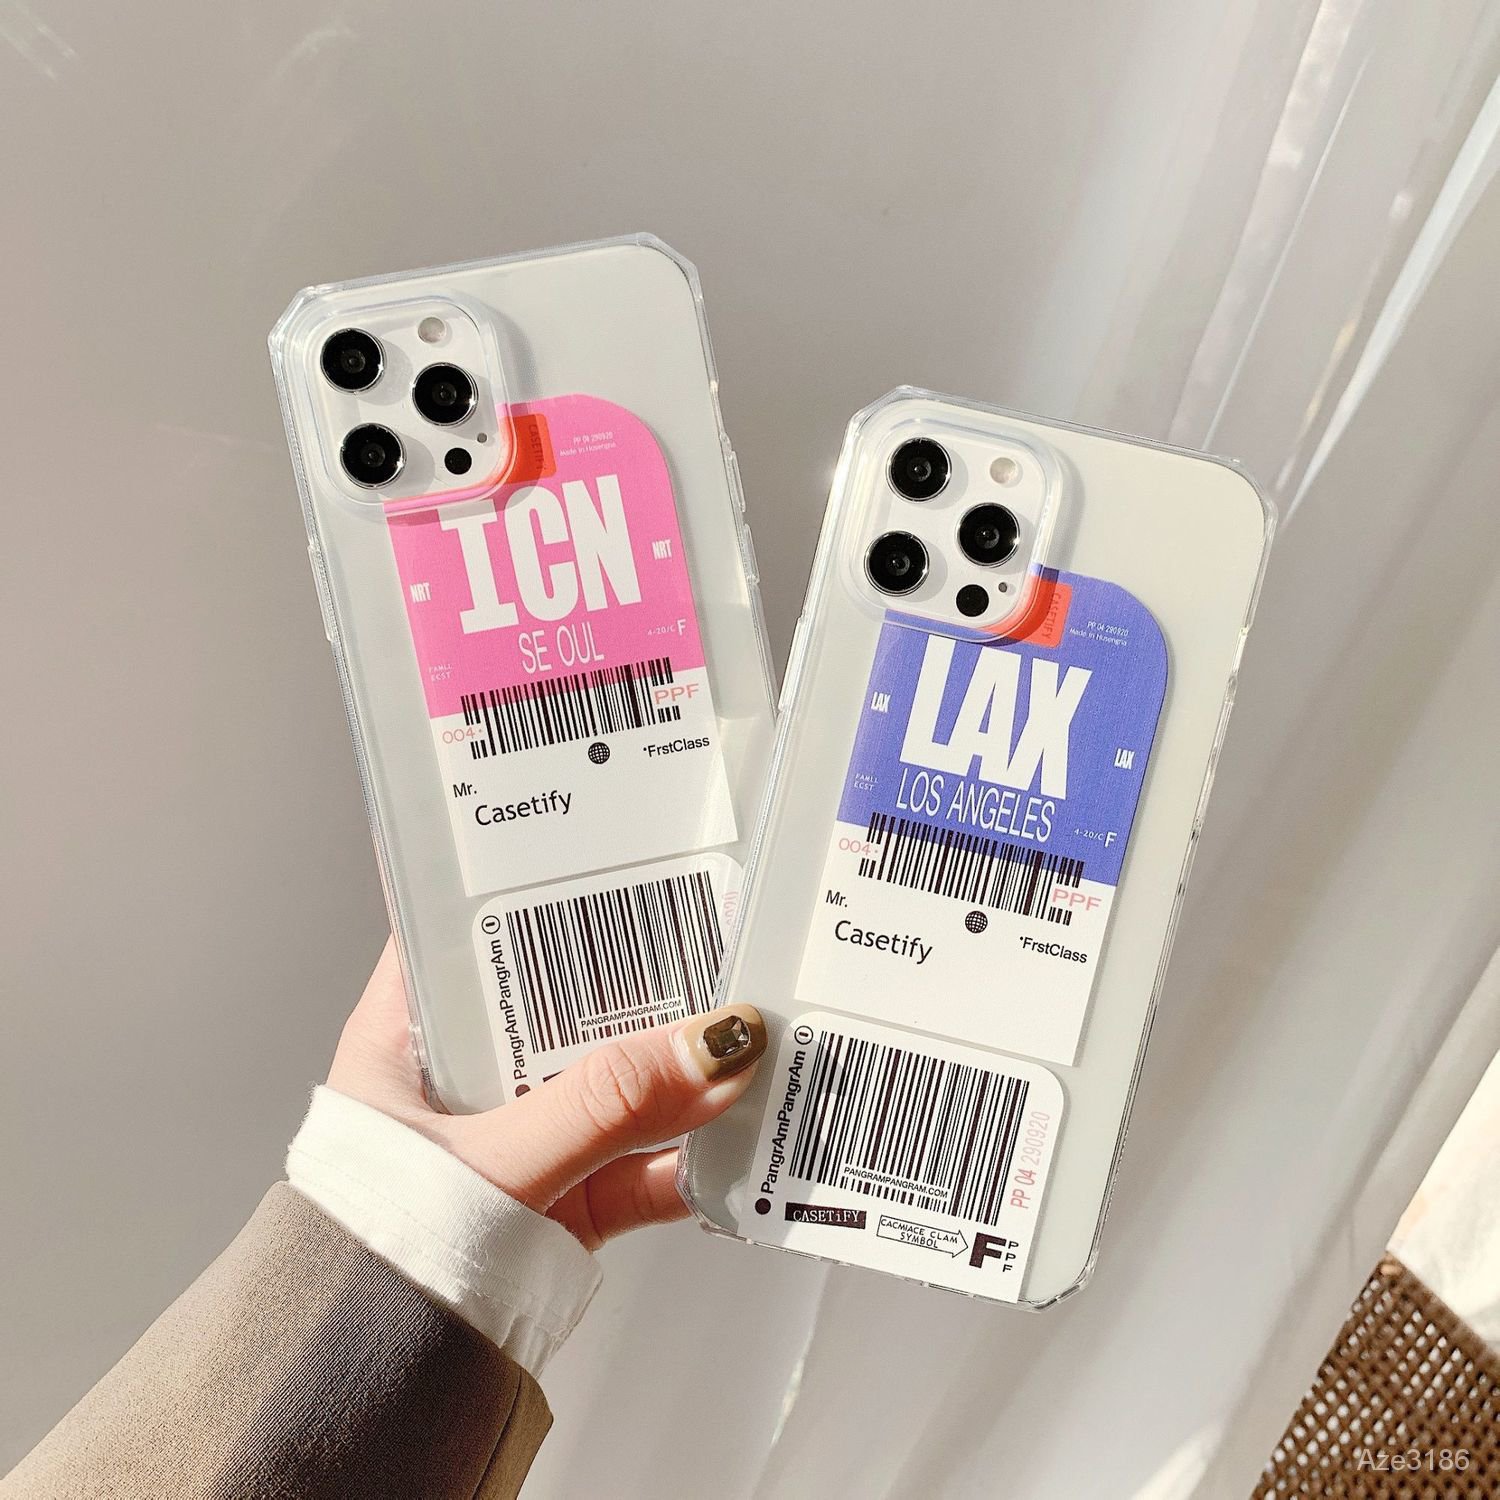 iPhone X XR XS MAX 12 11 Pro max 7 8 plus Seoul Paris Air Ticket Label Transparent Phone Case Shatter-Resistant Shell